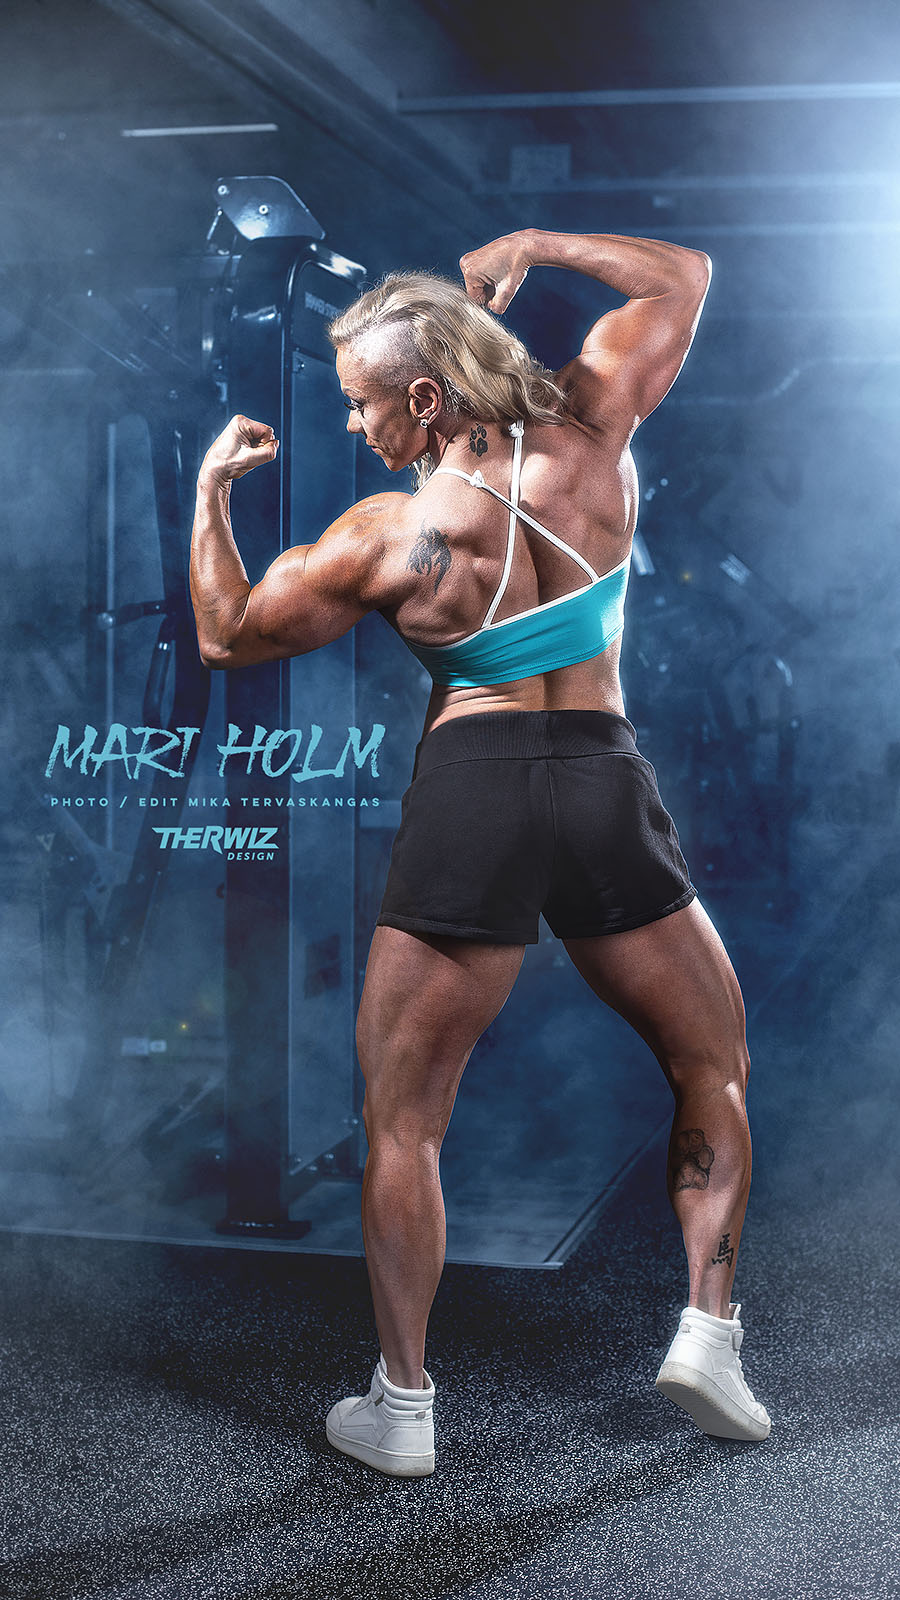 Therwiz Design fitnesskuva, urheilujuliste, henkilökuva Mari Holm